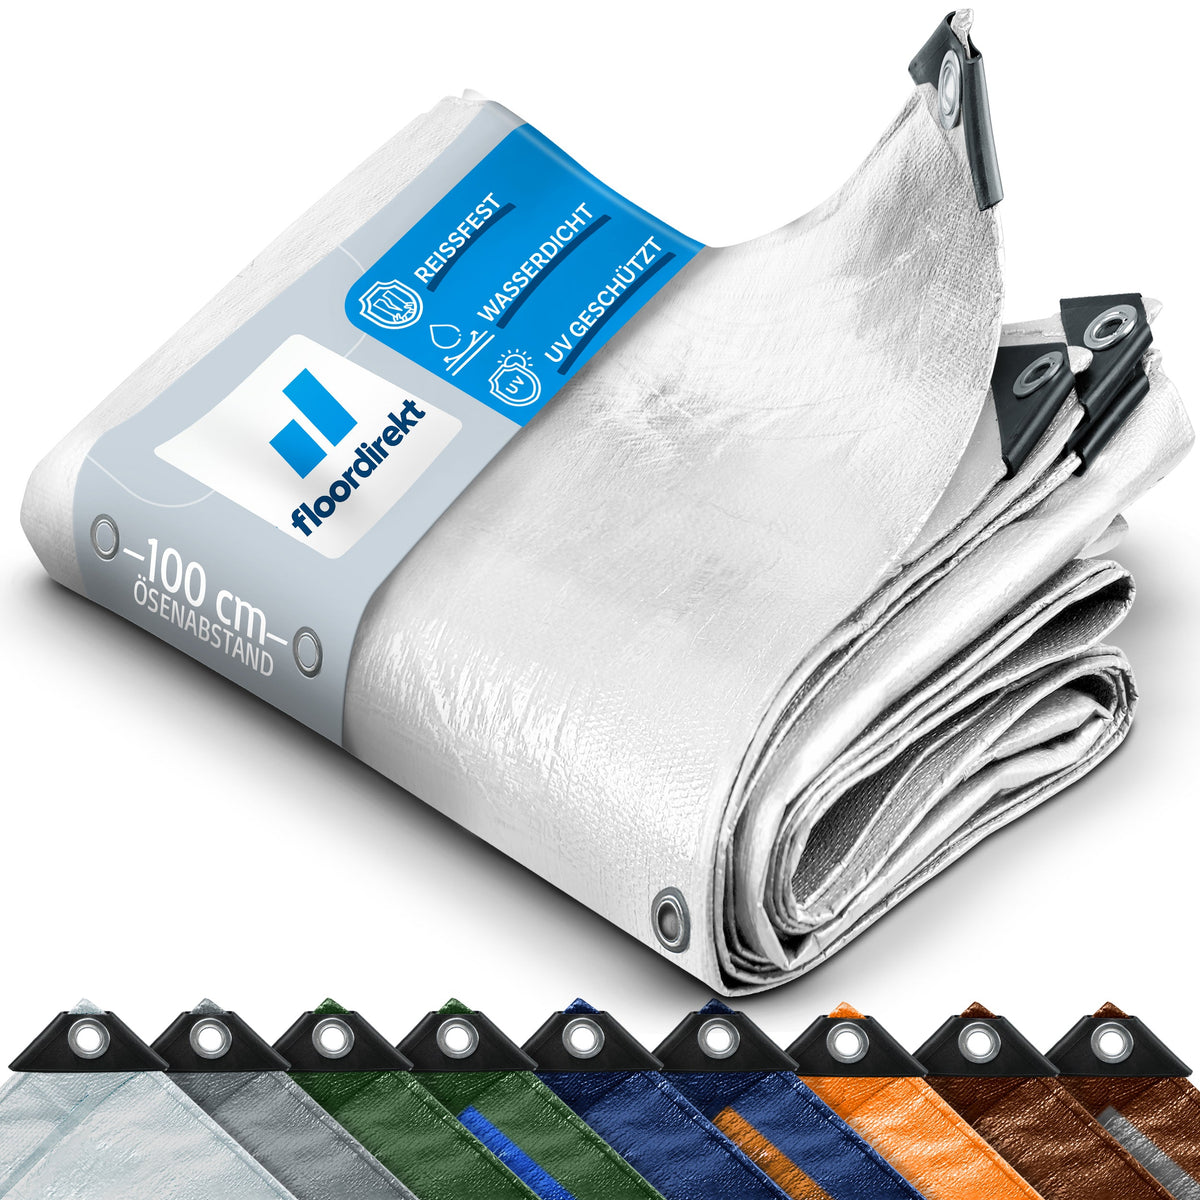 OfficeMarshal Teppich-Bodenschutzmatte, Transparent, PVC, 2,5 Millimeter